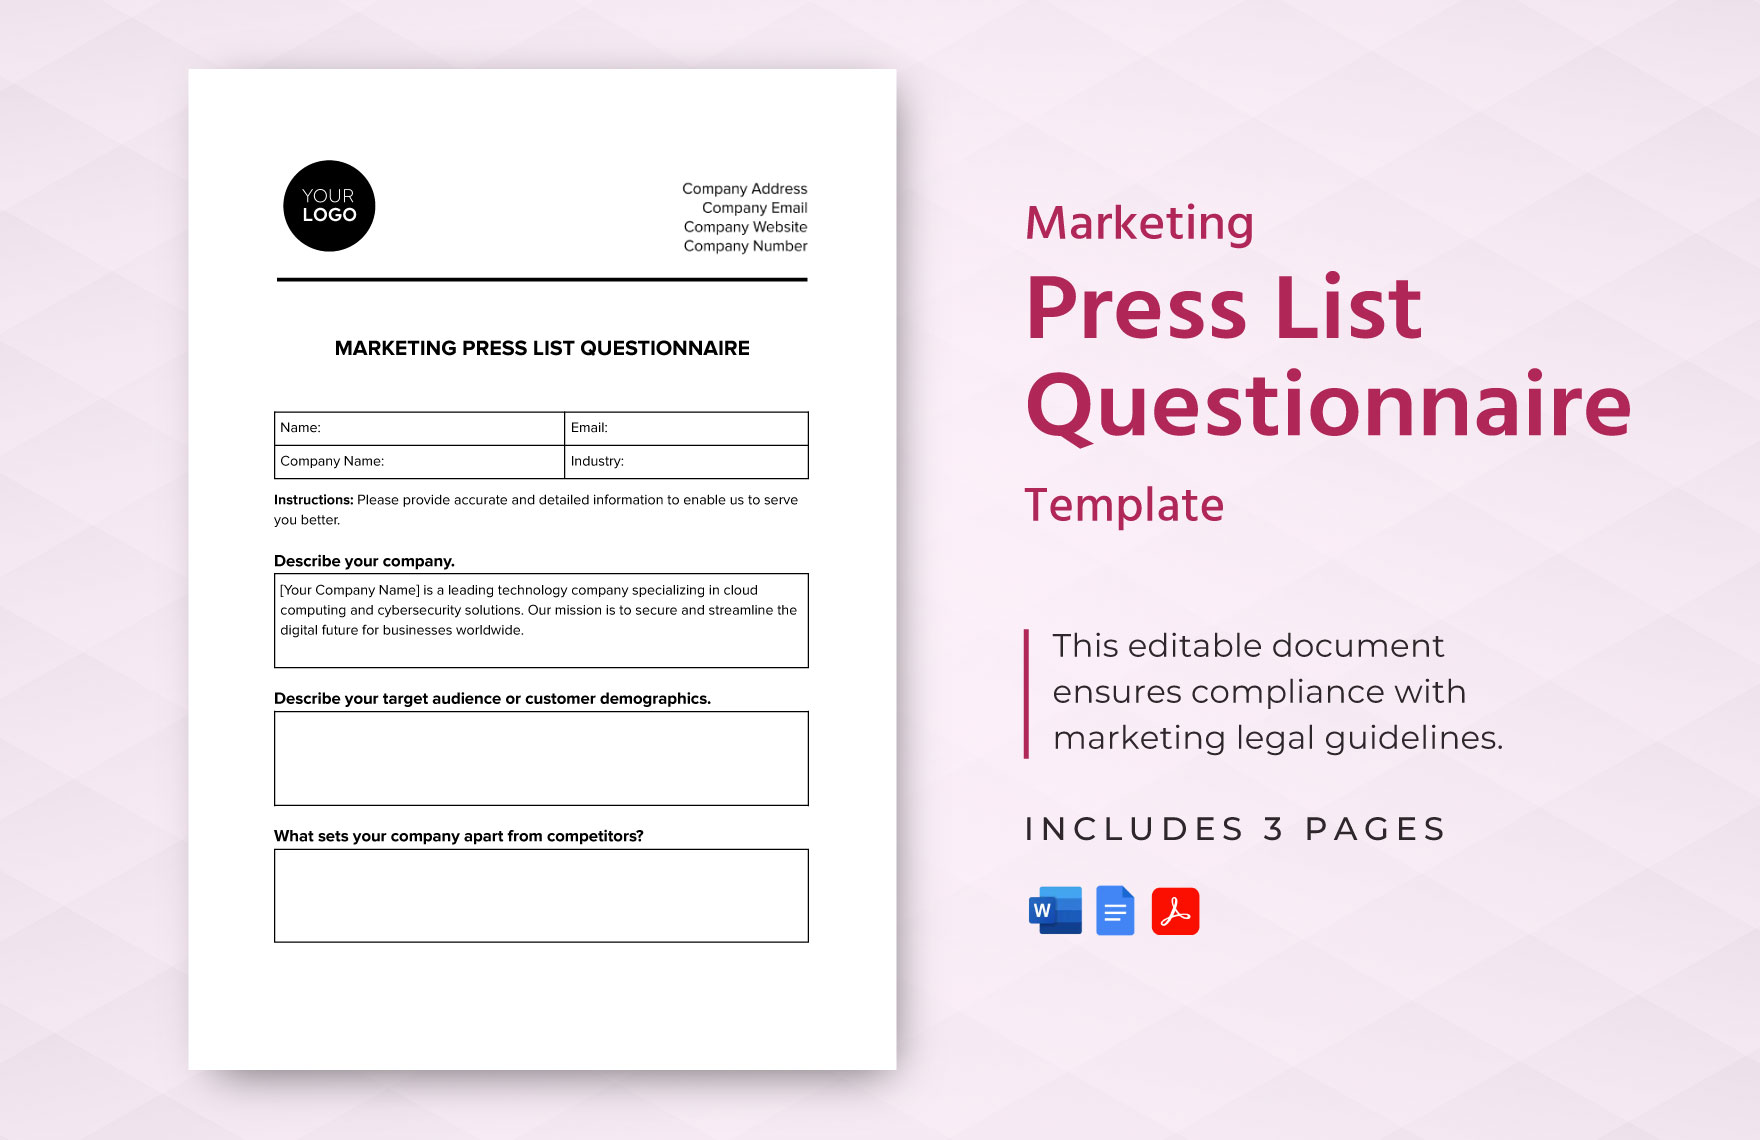 Marketing Press List Questionnaire Template in Word, Google Docs, PDF